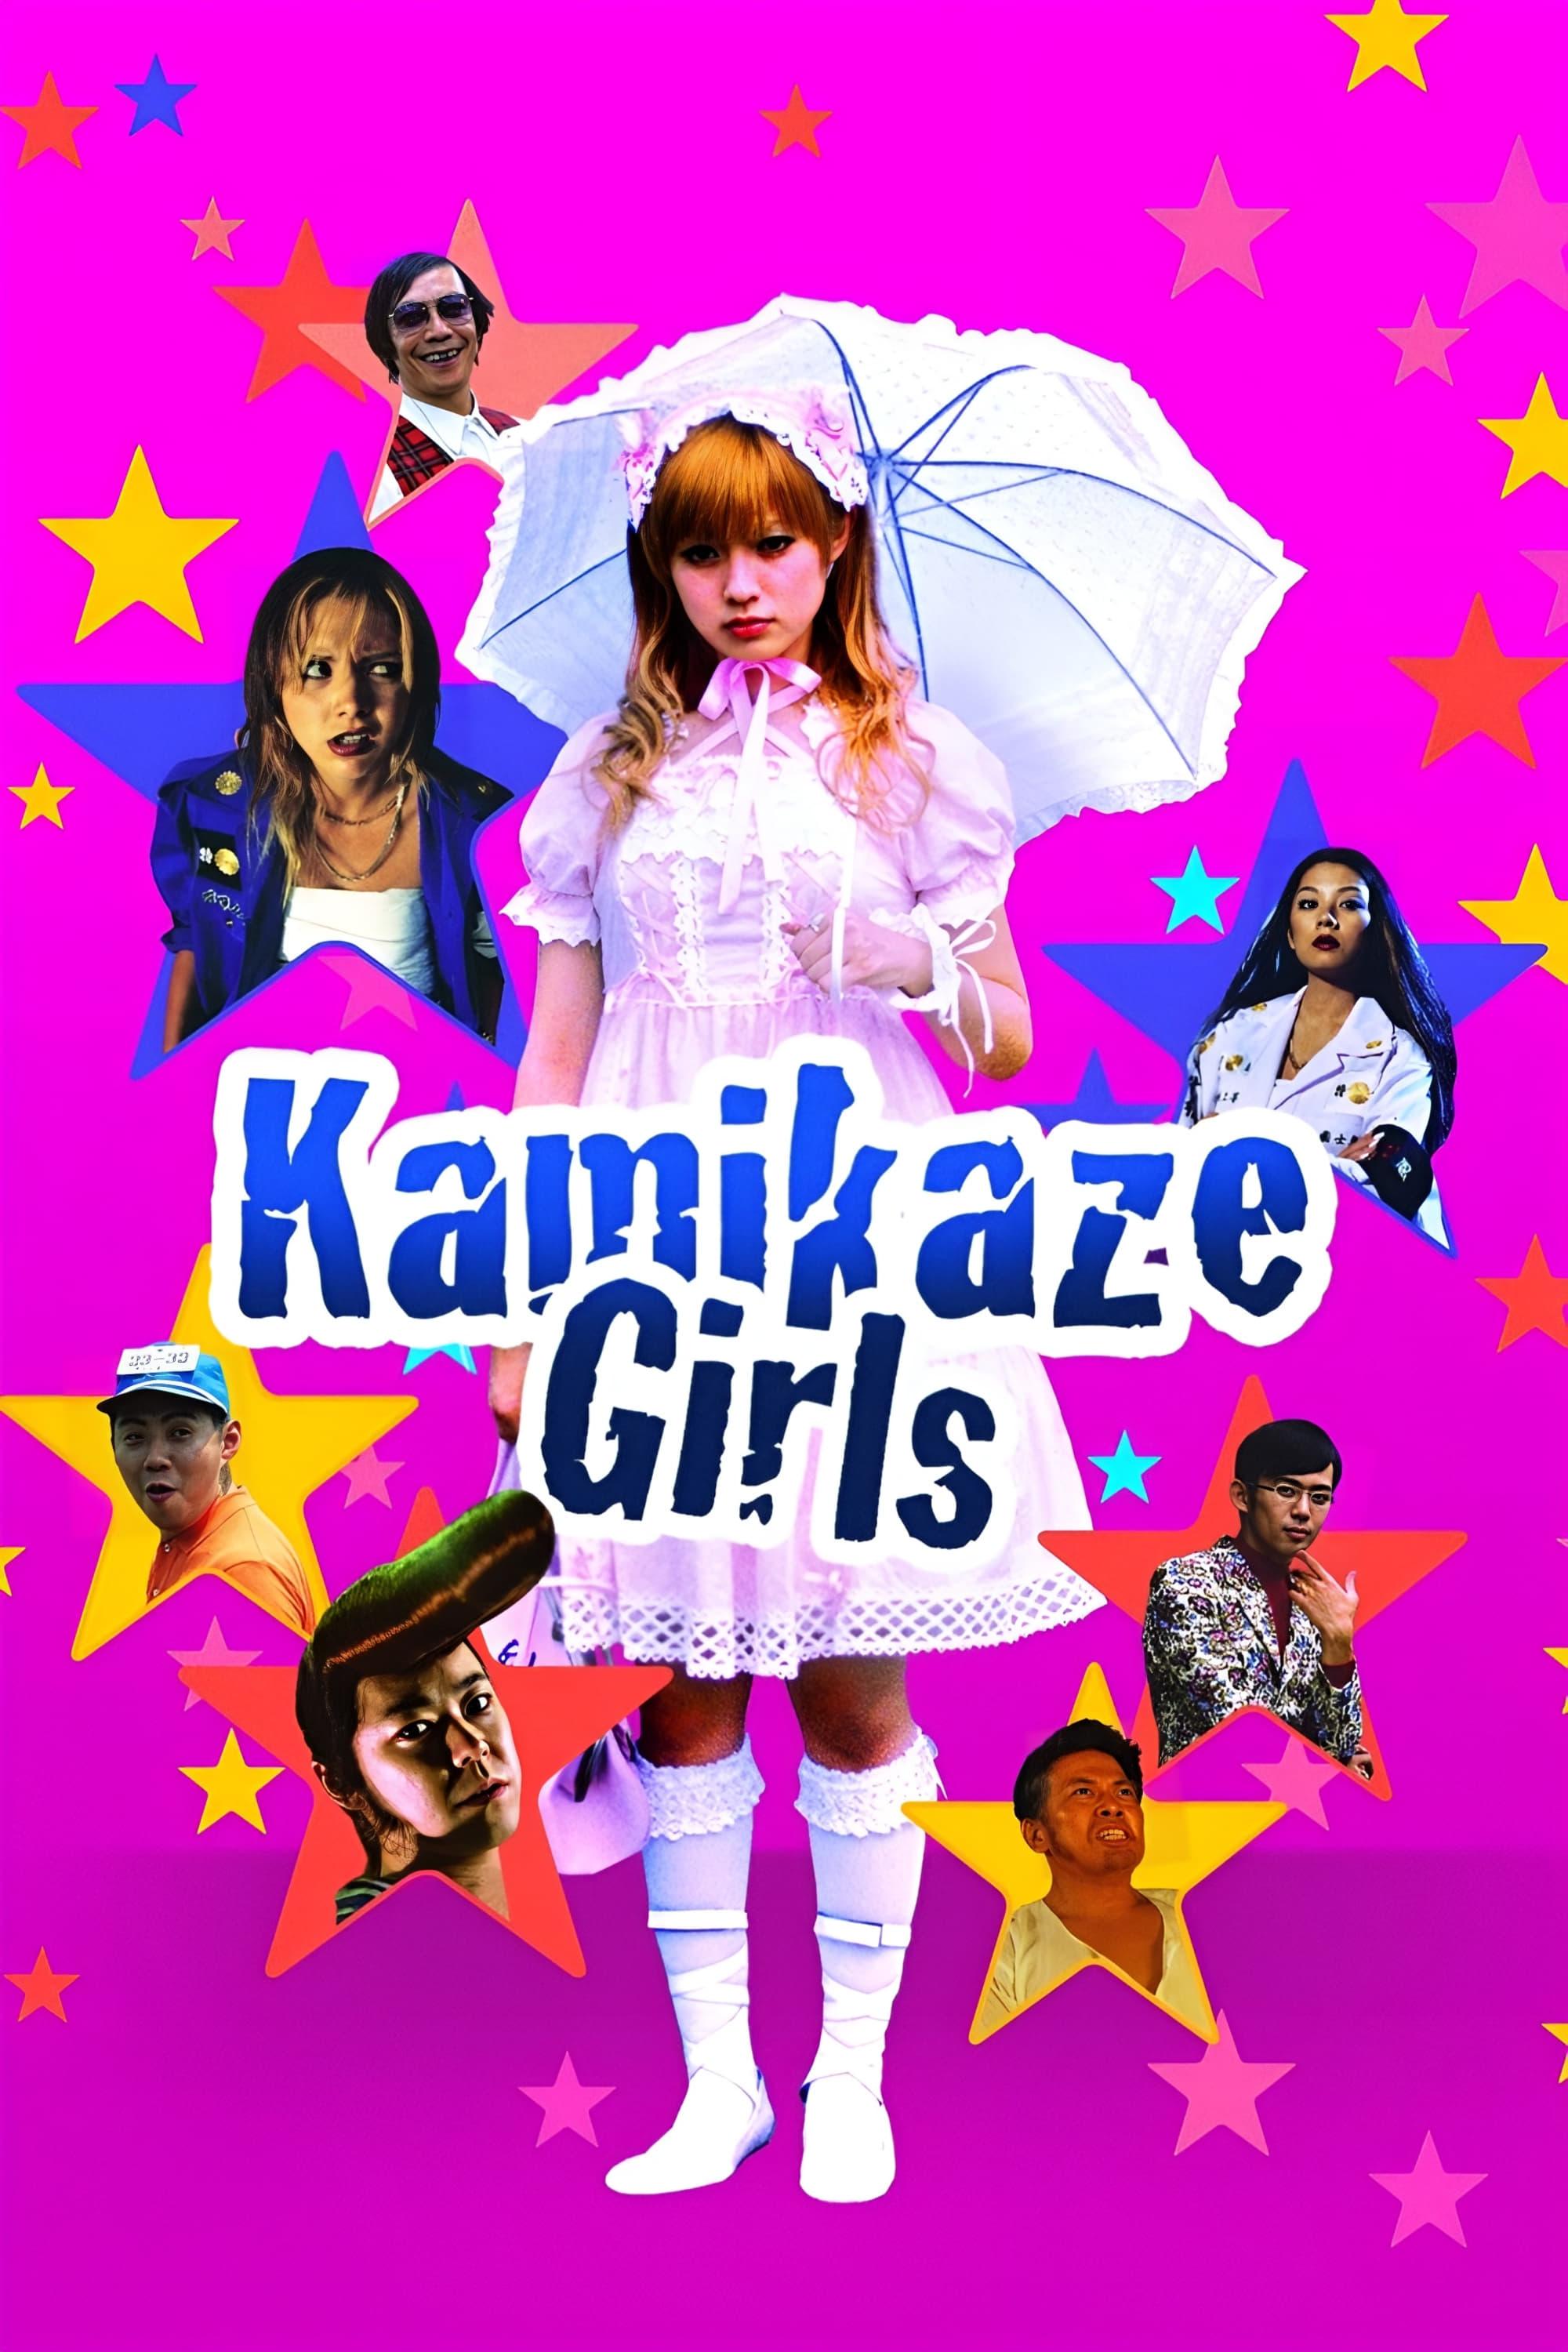 Kamikaze Girls poster